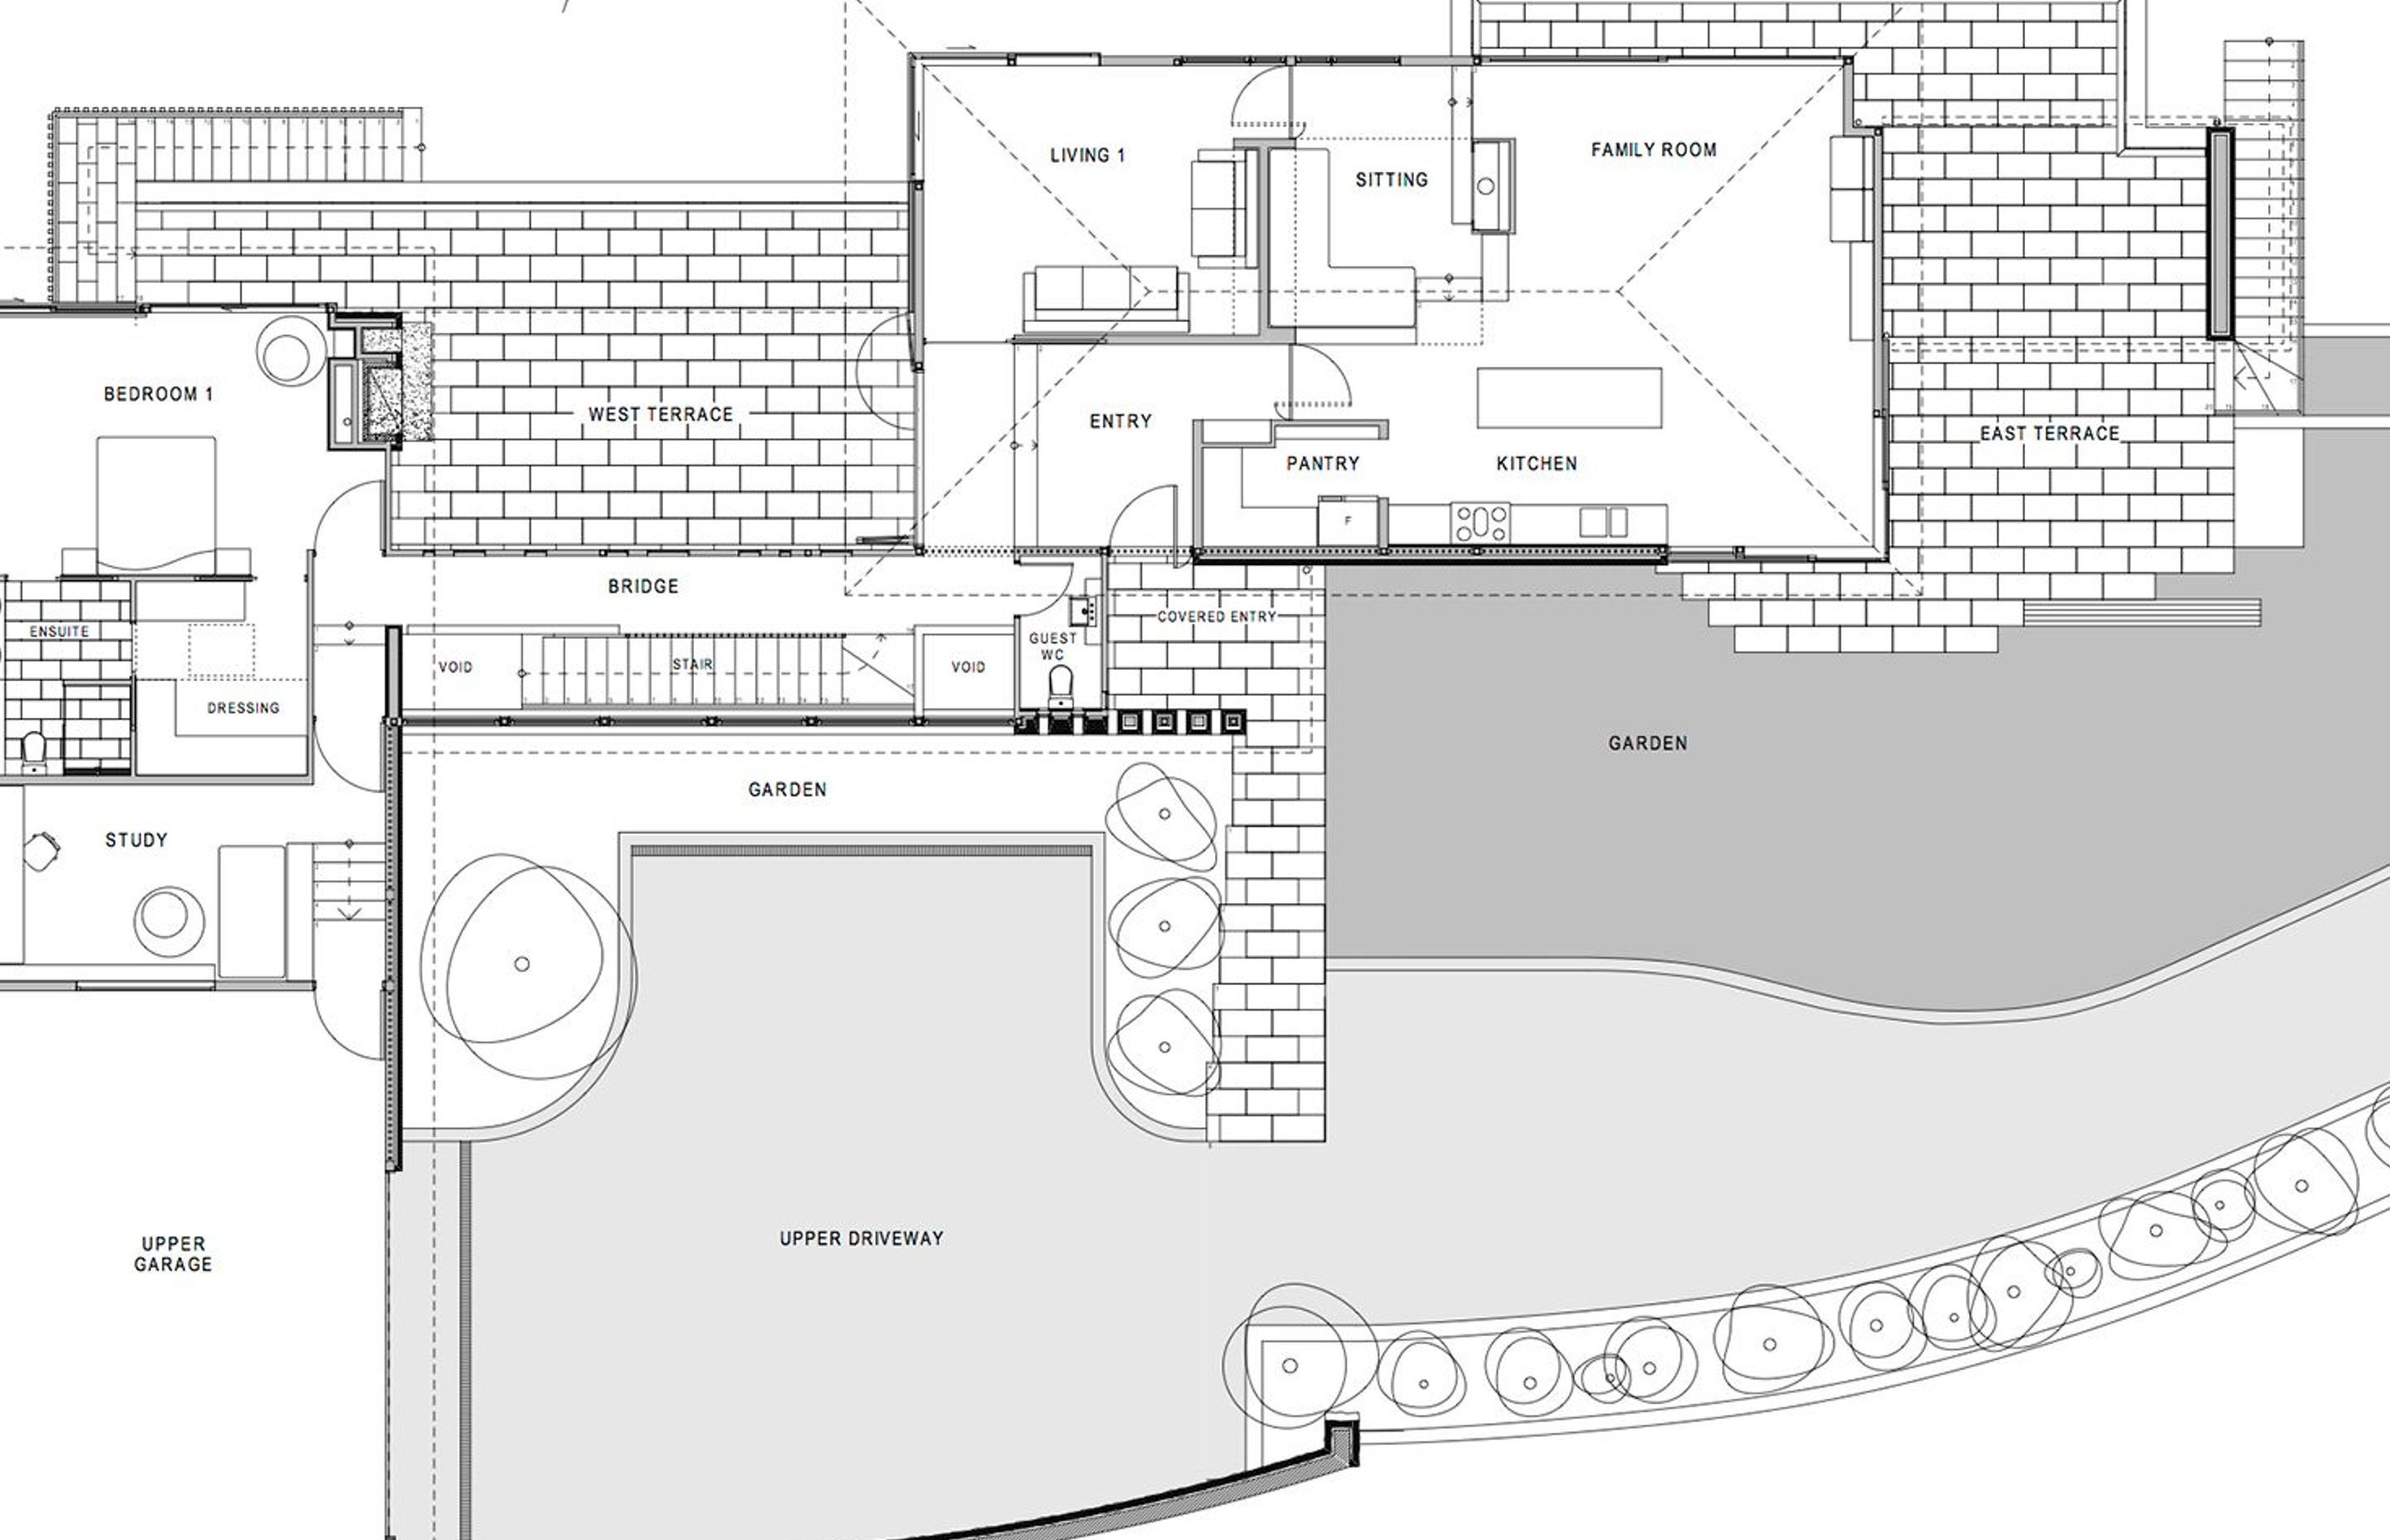 Upper-floor plan by Megan Edwards Architects.